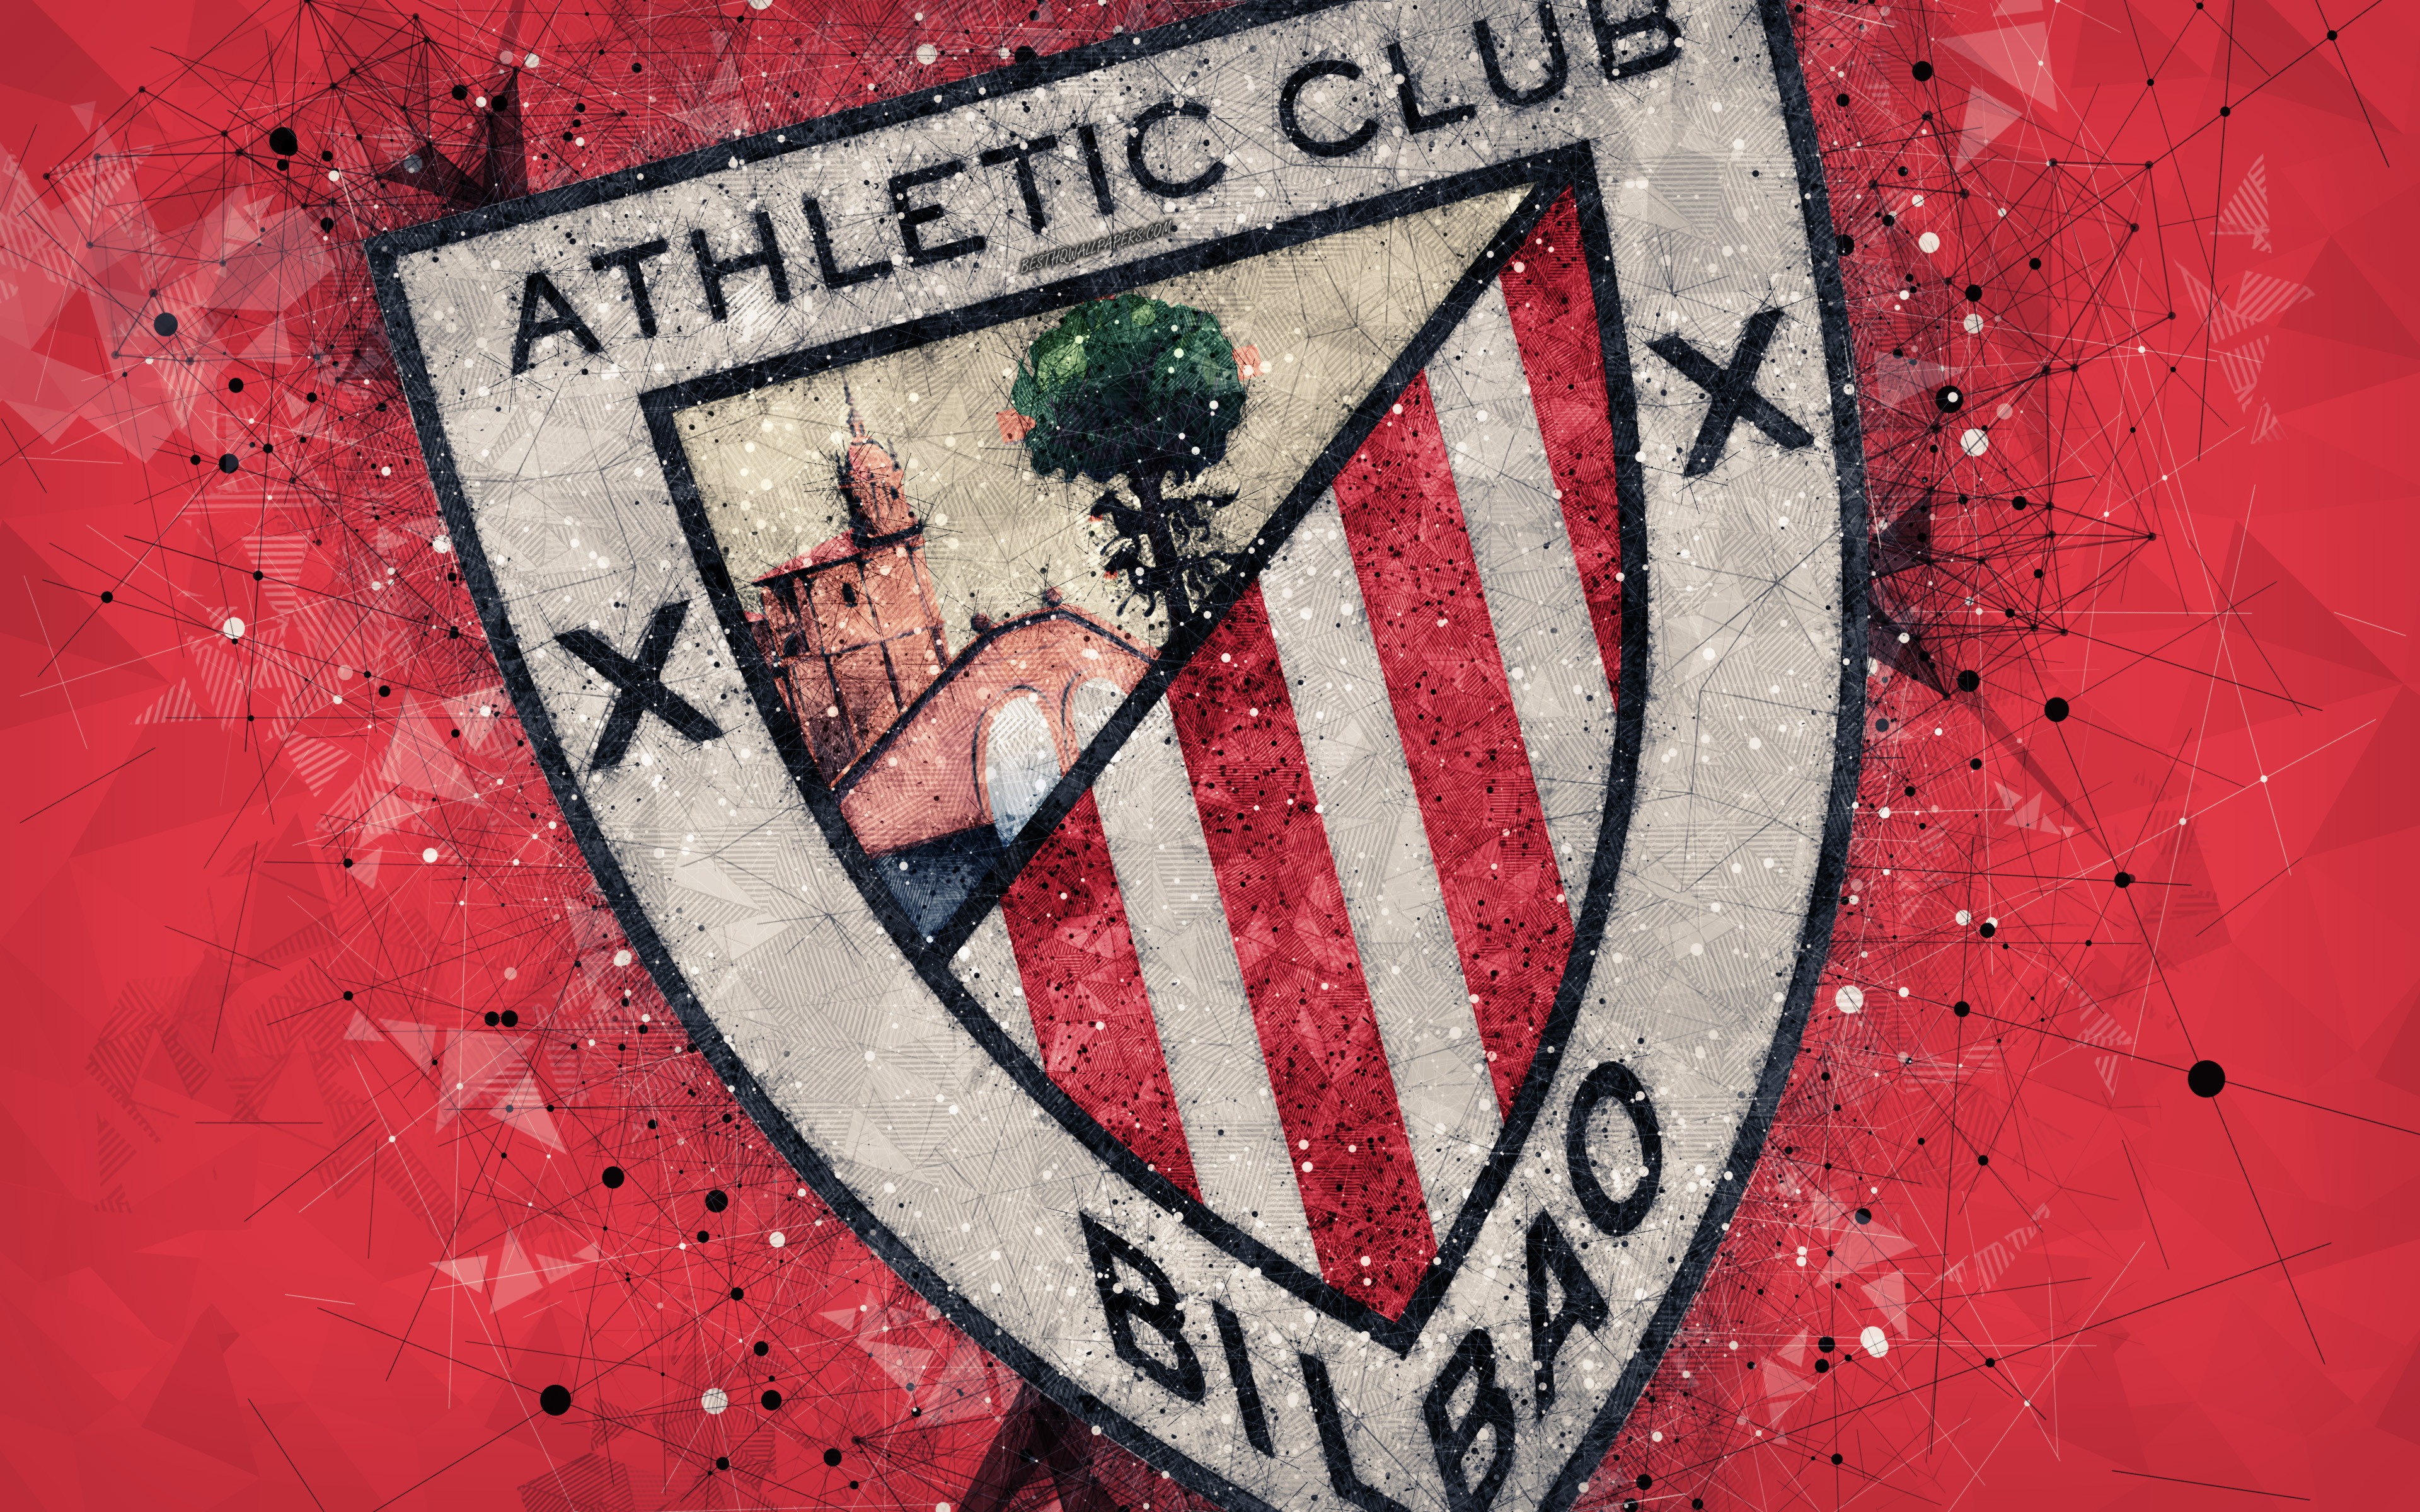 athletic bilbao, sports, emblem, logo, soccer